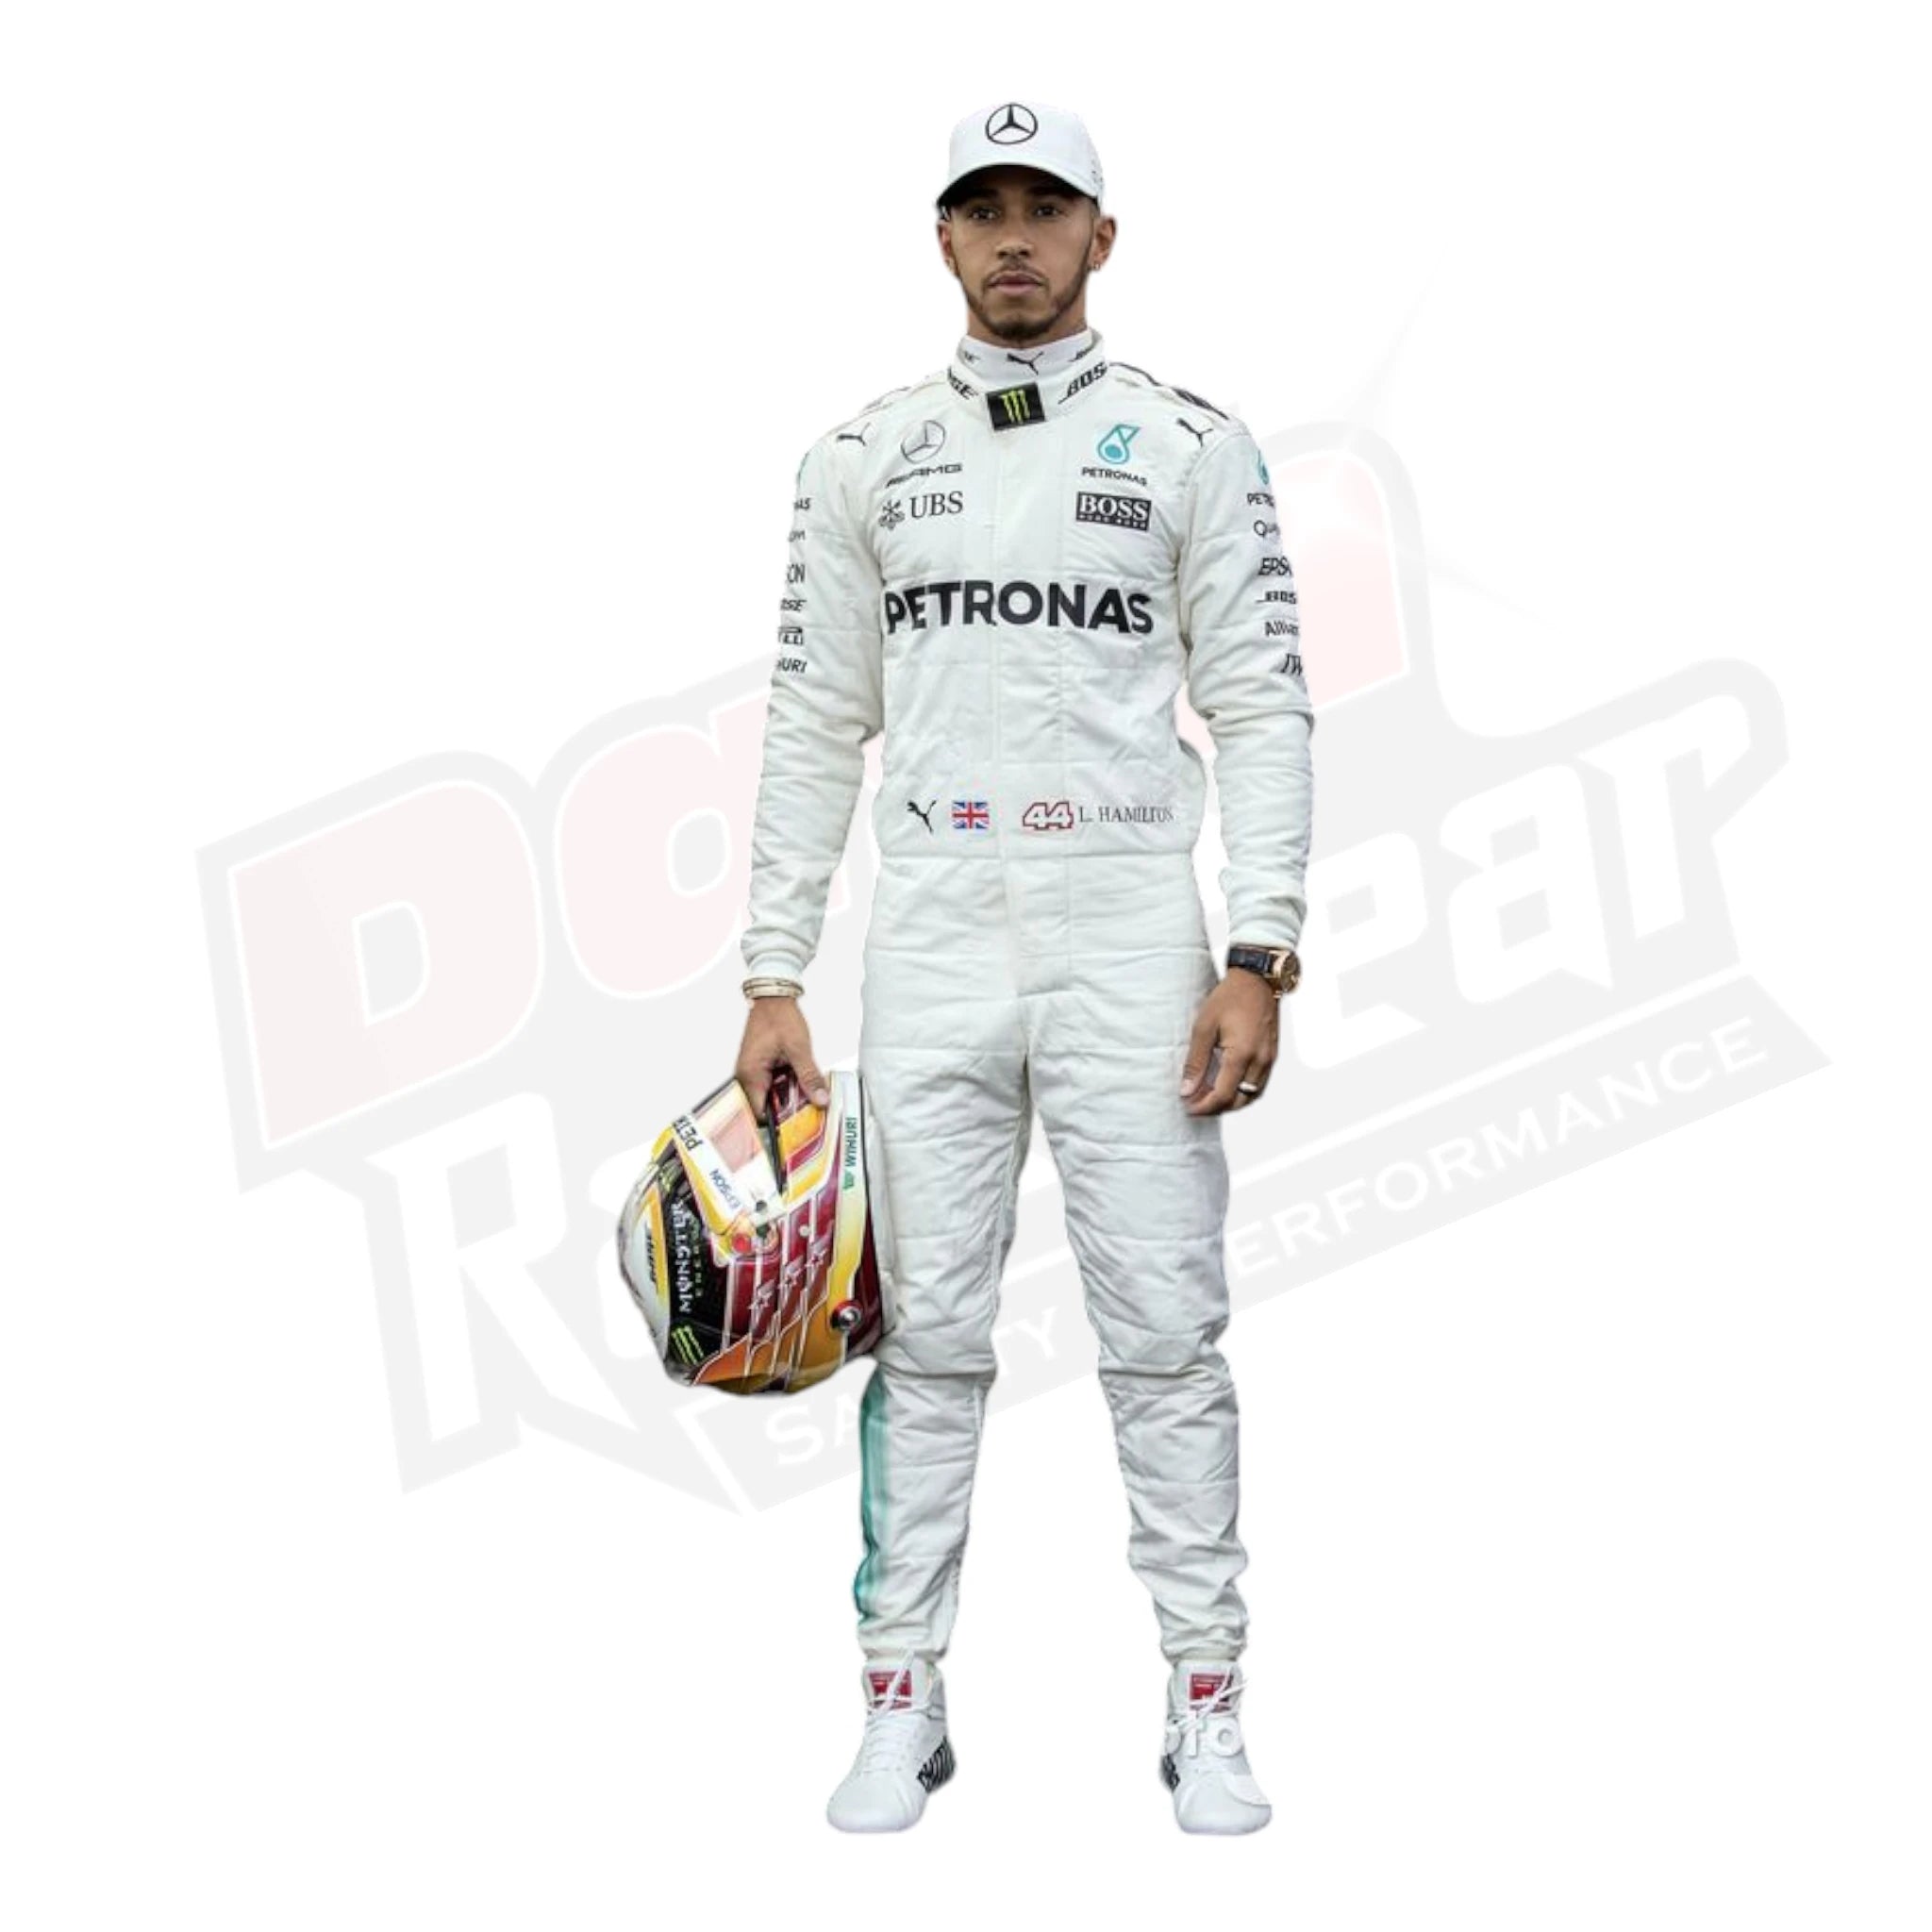 2017 Lewis Hamilton Mercedes-Benz F1 Printed Racing Suit